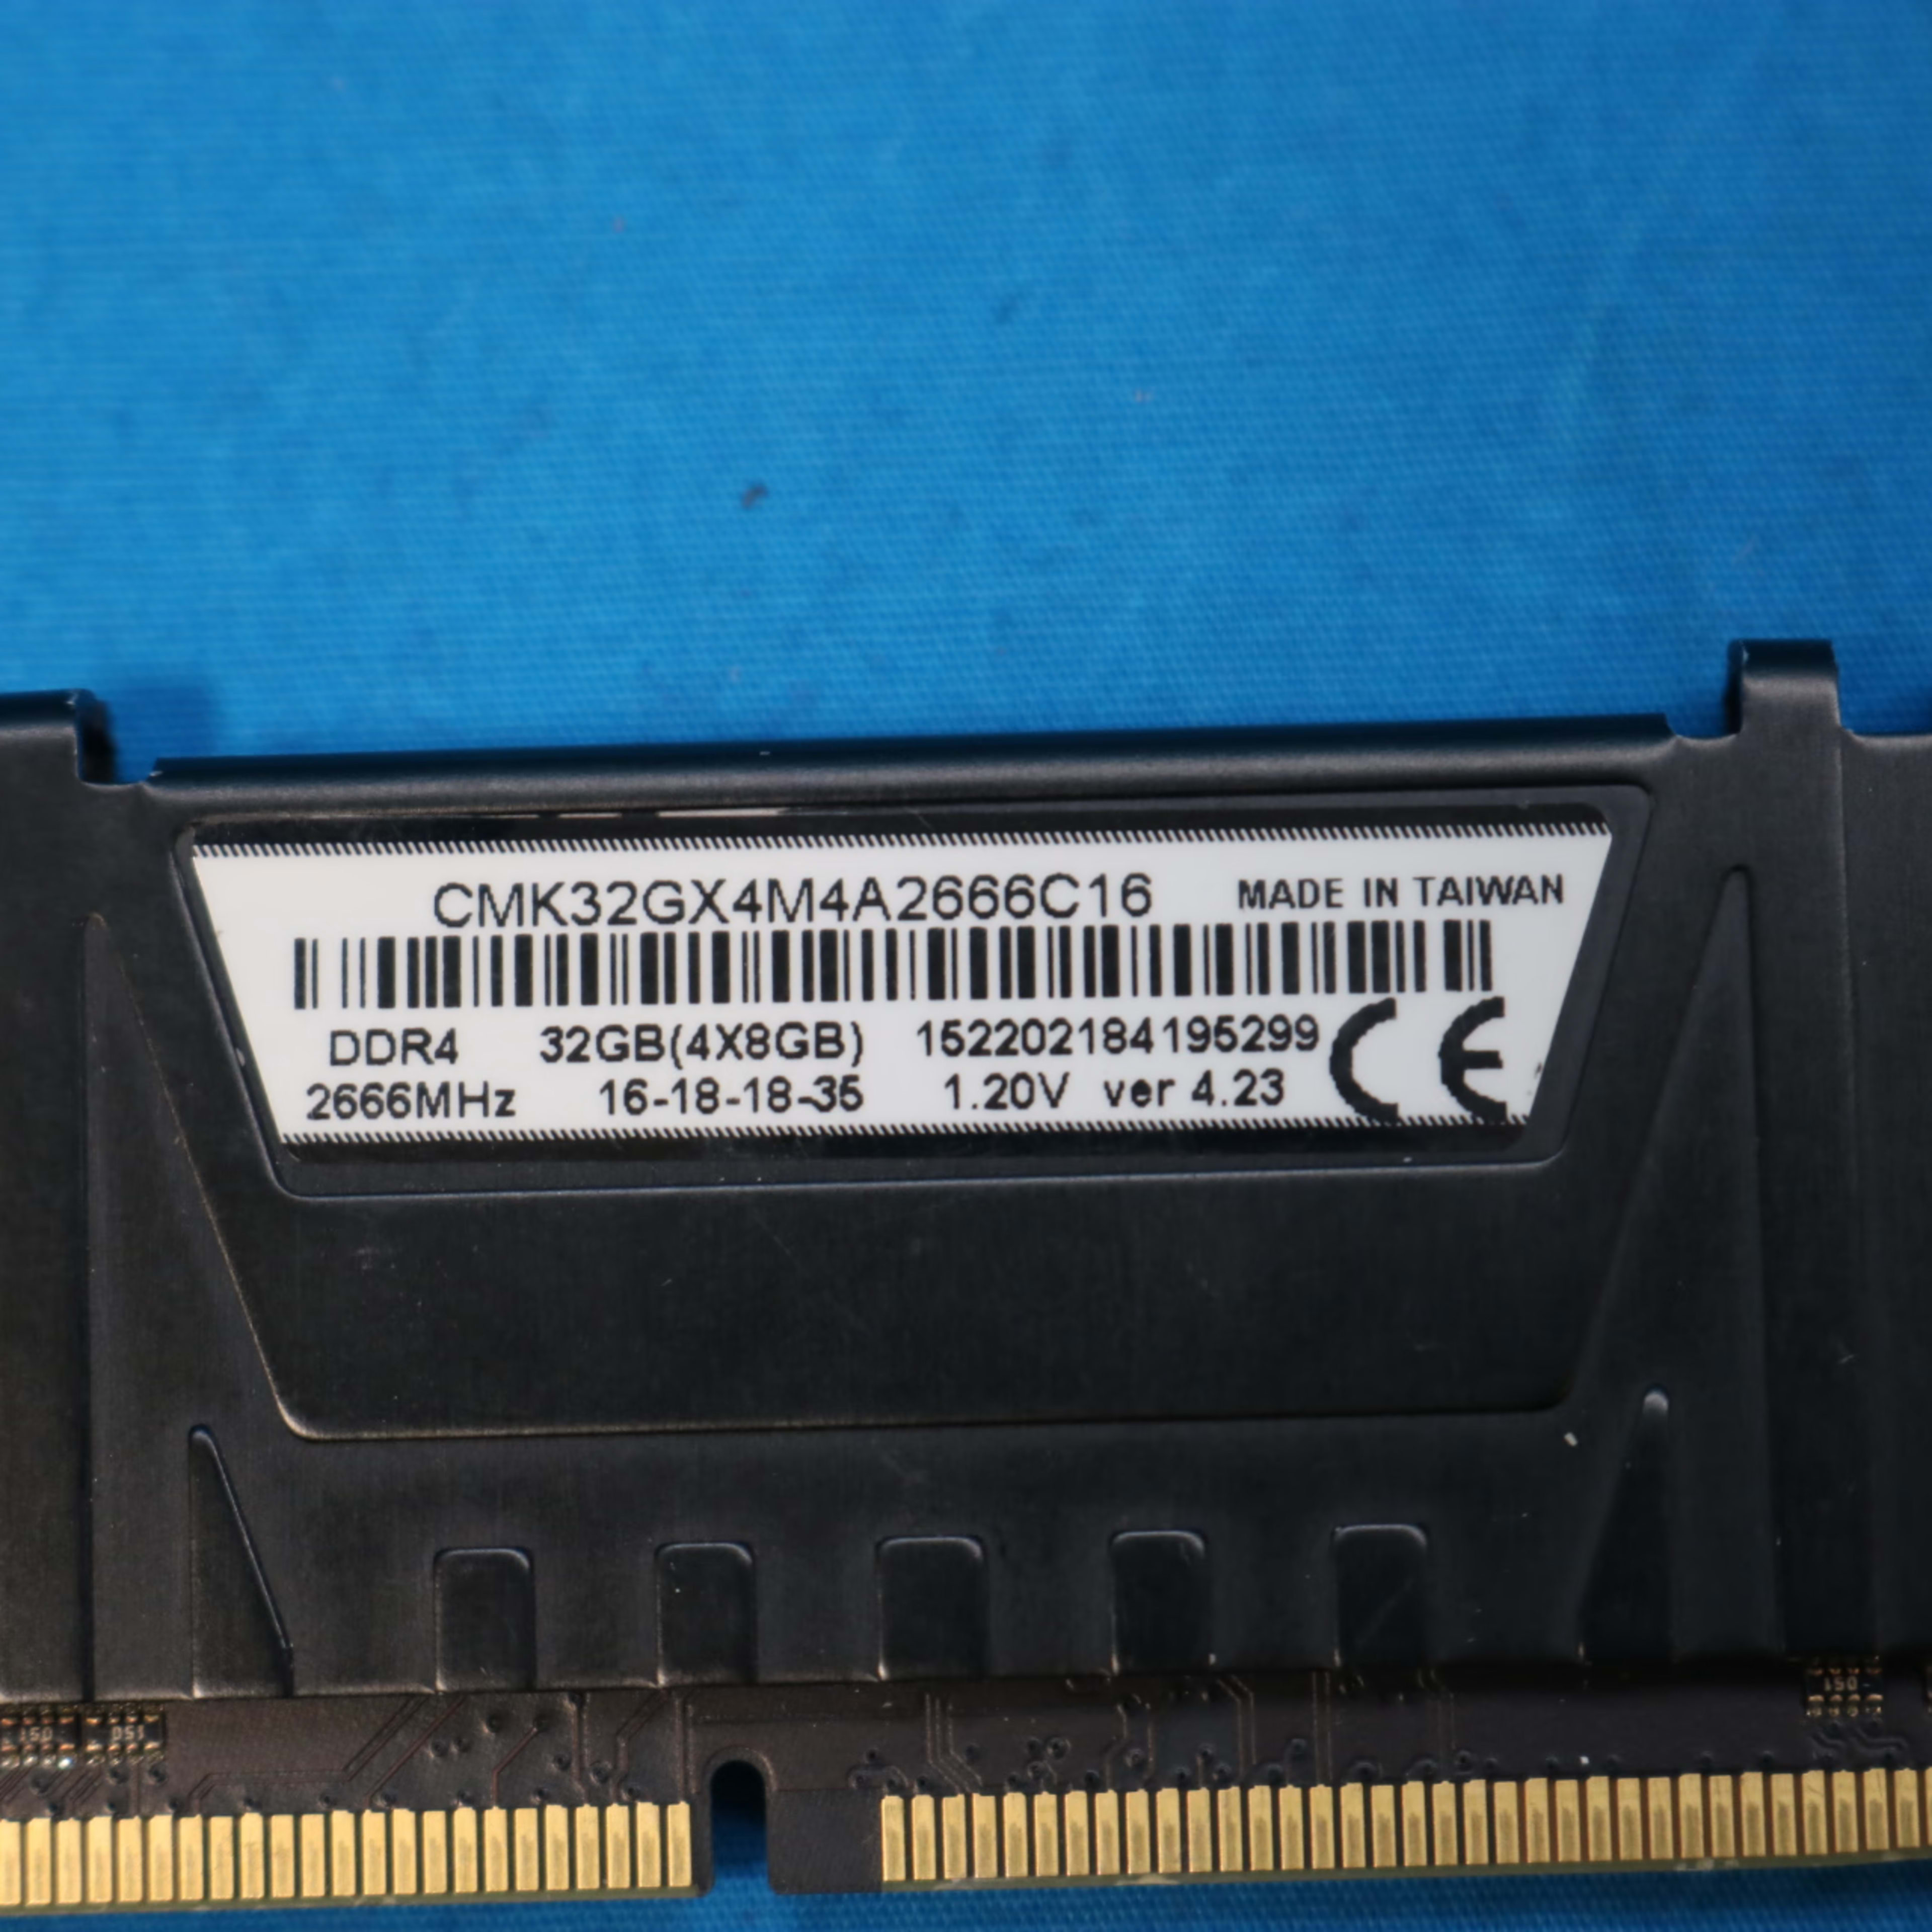 Corsair Vengeance LPX 32GB (4x8GB) DDR4 2666MHz CL16 1.20V Desktop RAM CMK32GX4M4A2666C16 ver. 4.23